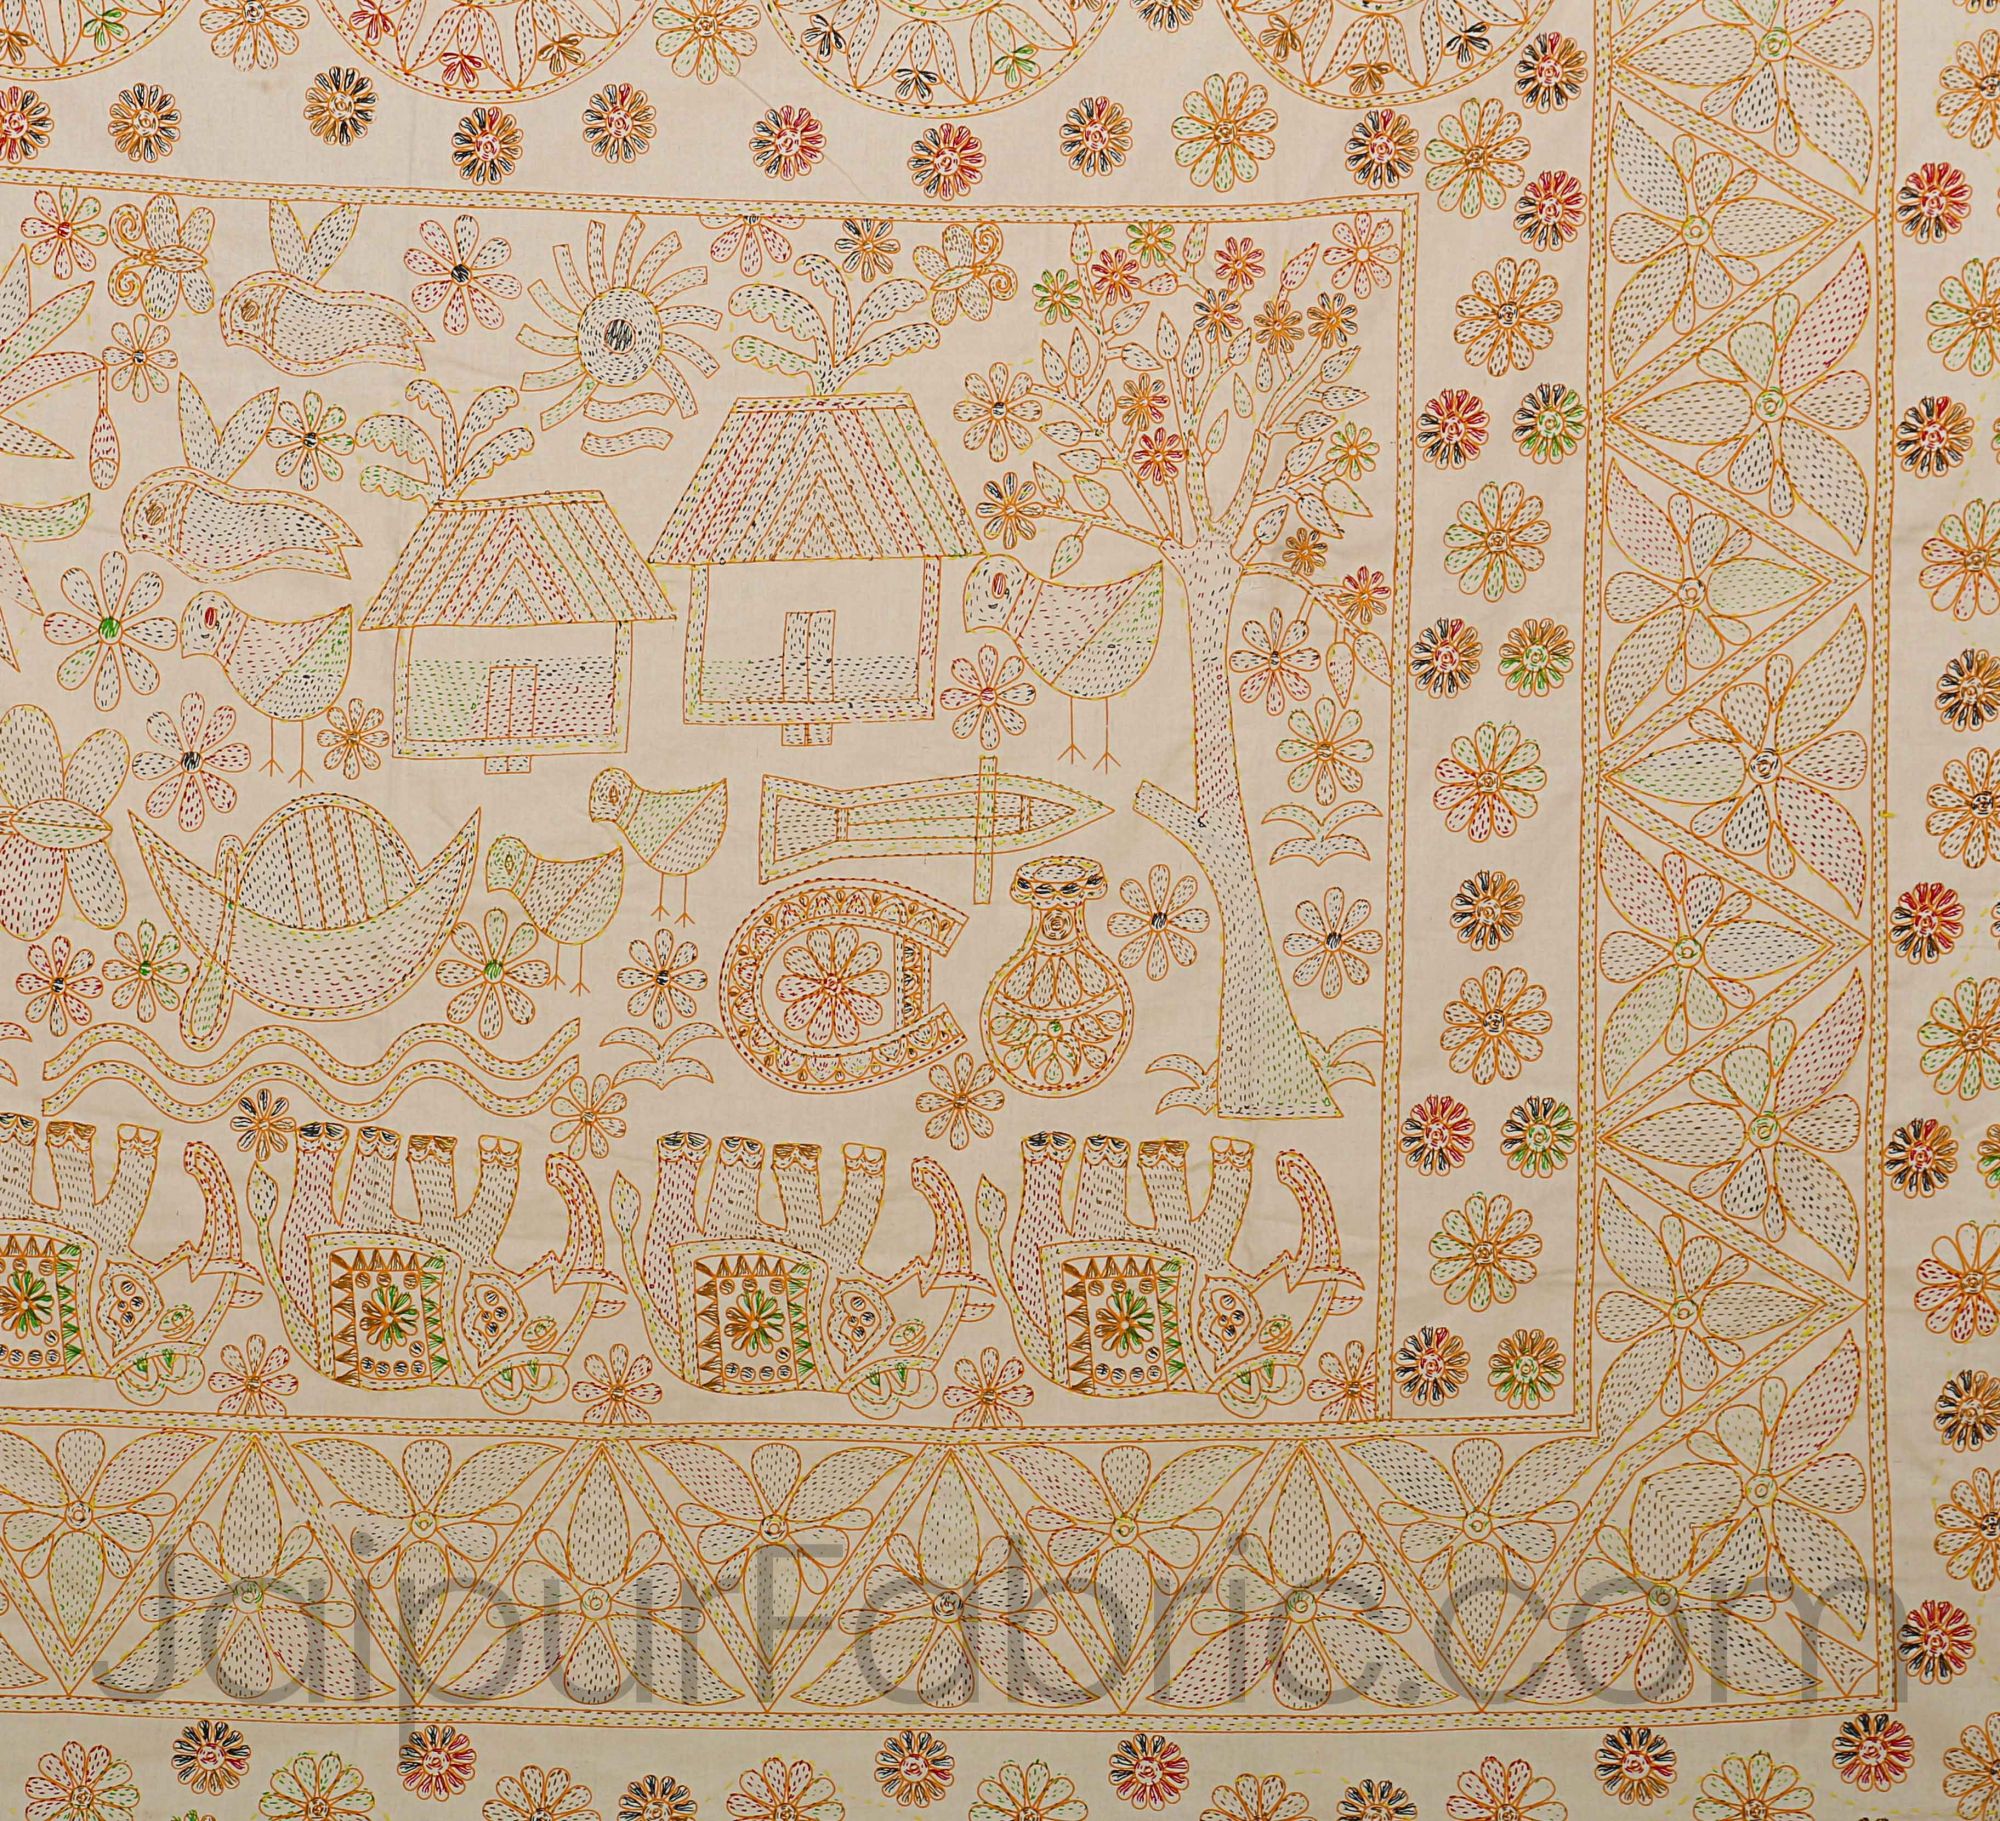 Beautiful Cream Kantha Thread Work Embroidery Double Bedsheet / Dohar / Light Blanket / Thin Comforter